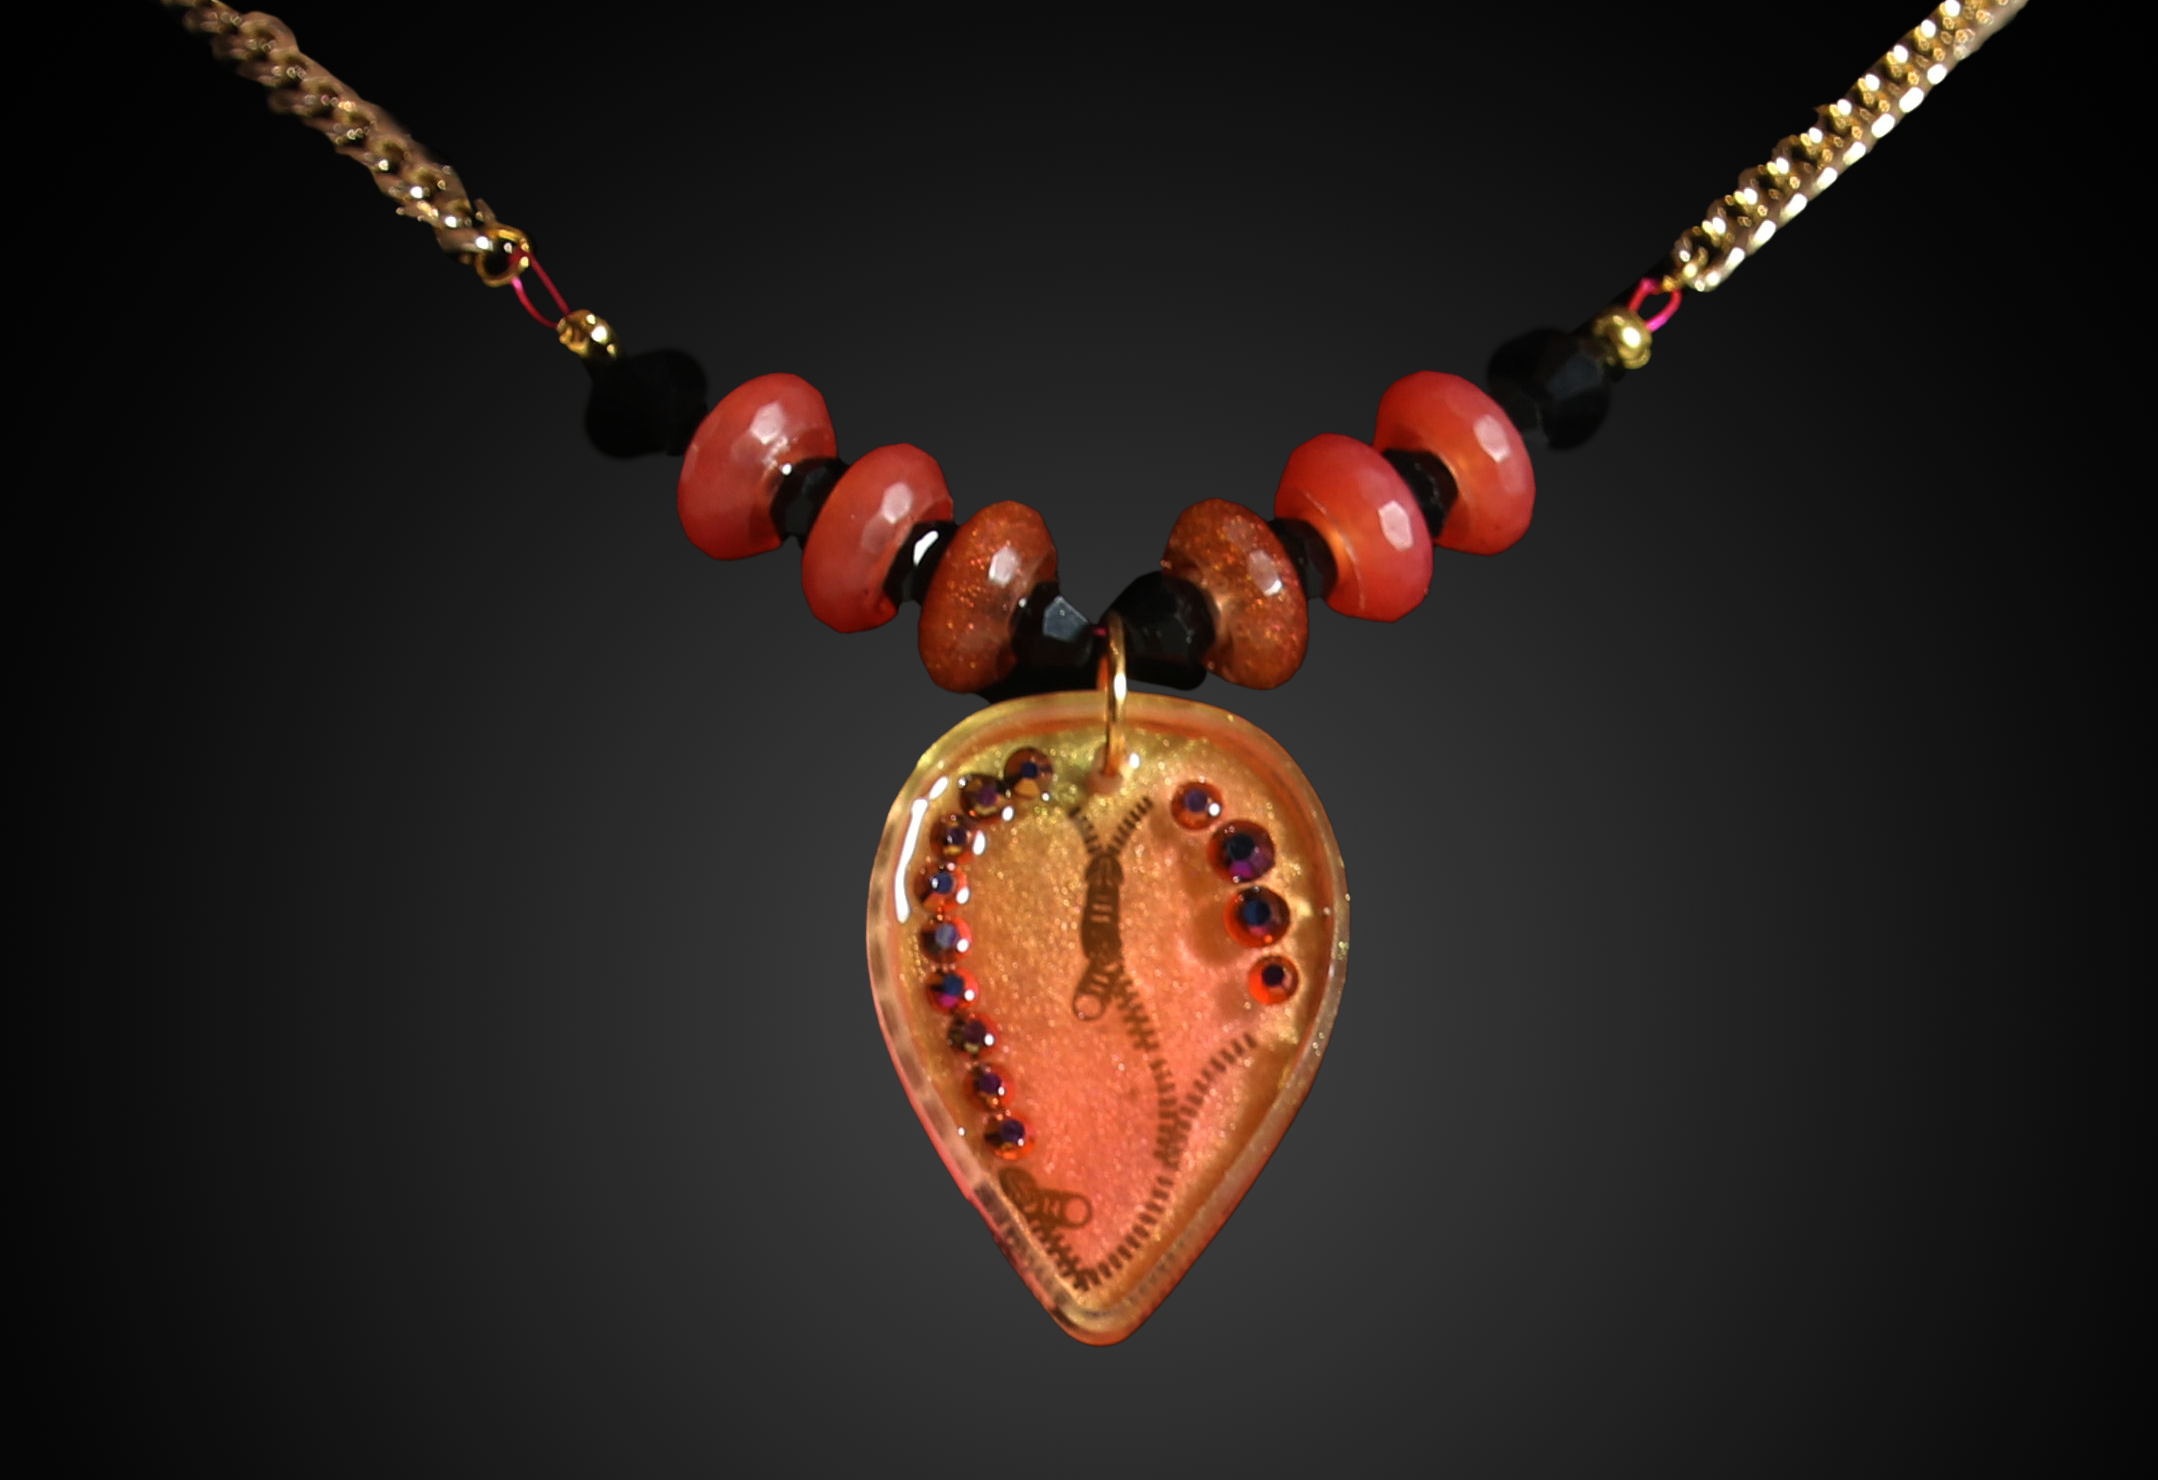 Fire Orange Teardrop Pendant with Zipper and necklace